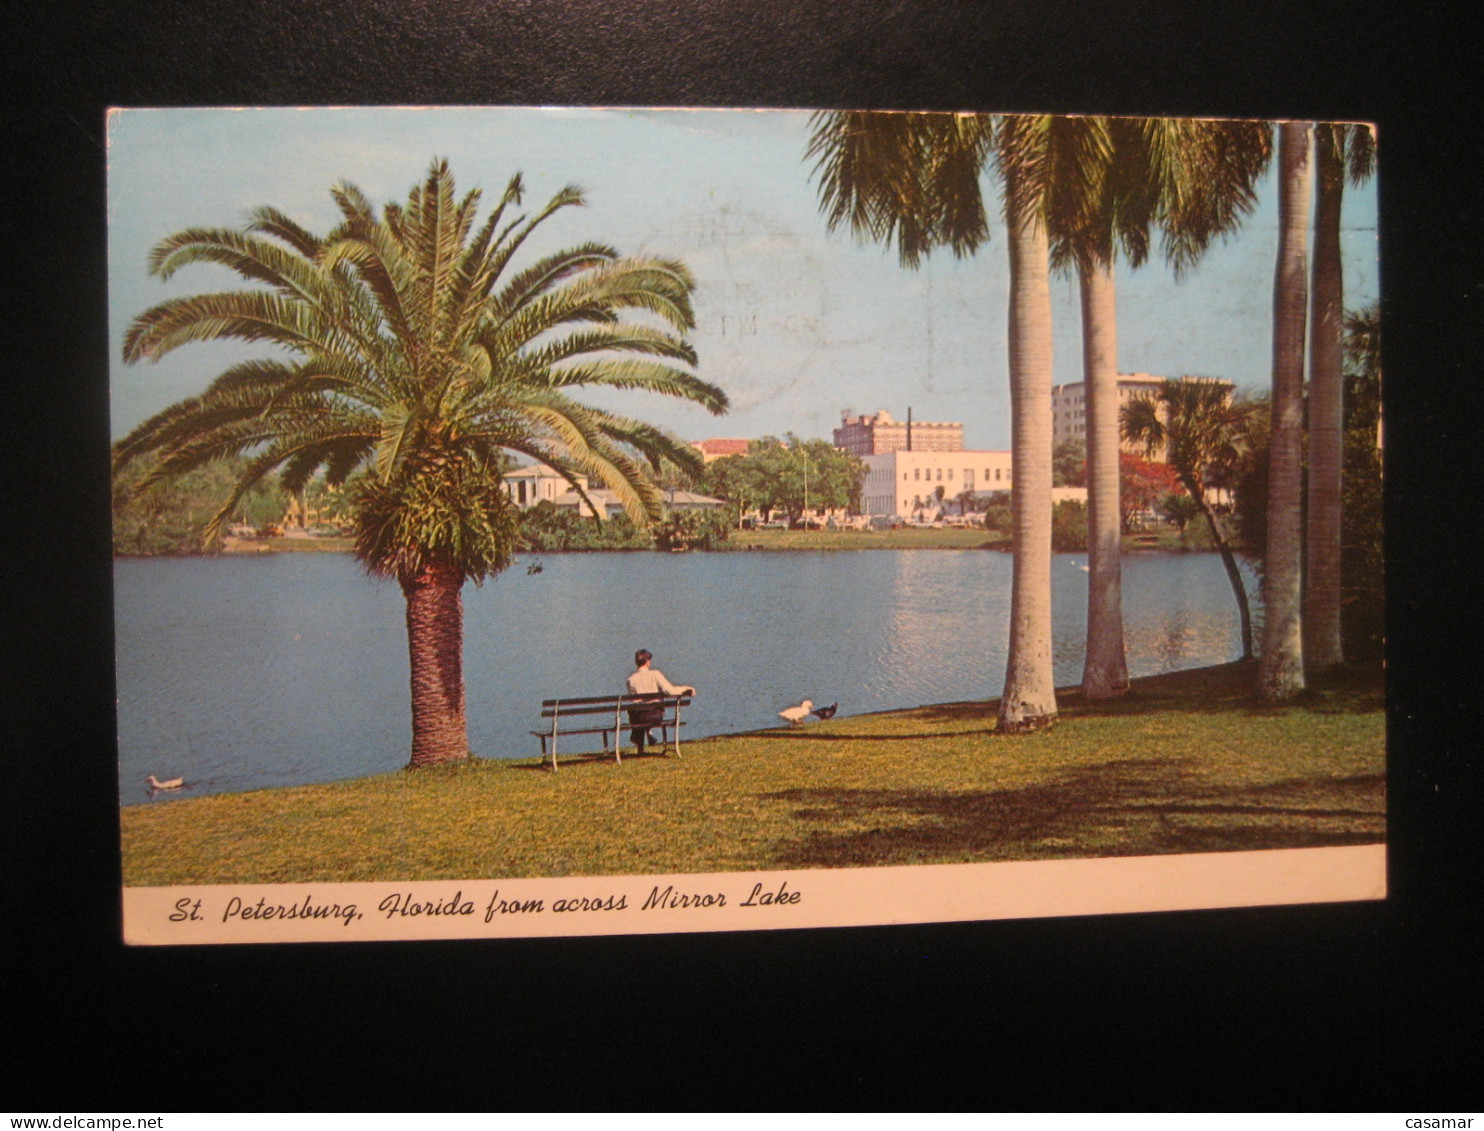 SAINT PETERSBURG Florida Mirror Lake Cancel 1968 To Sweden Postcard USA - St Petersburg